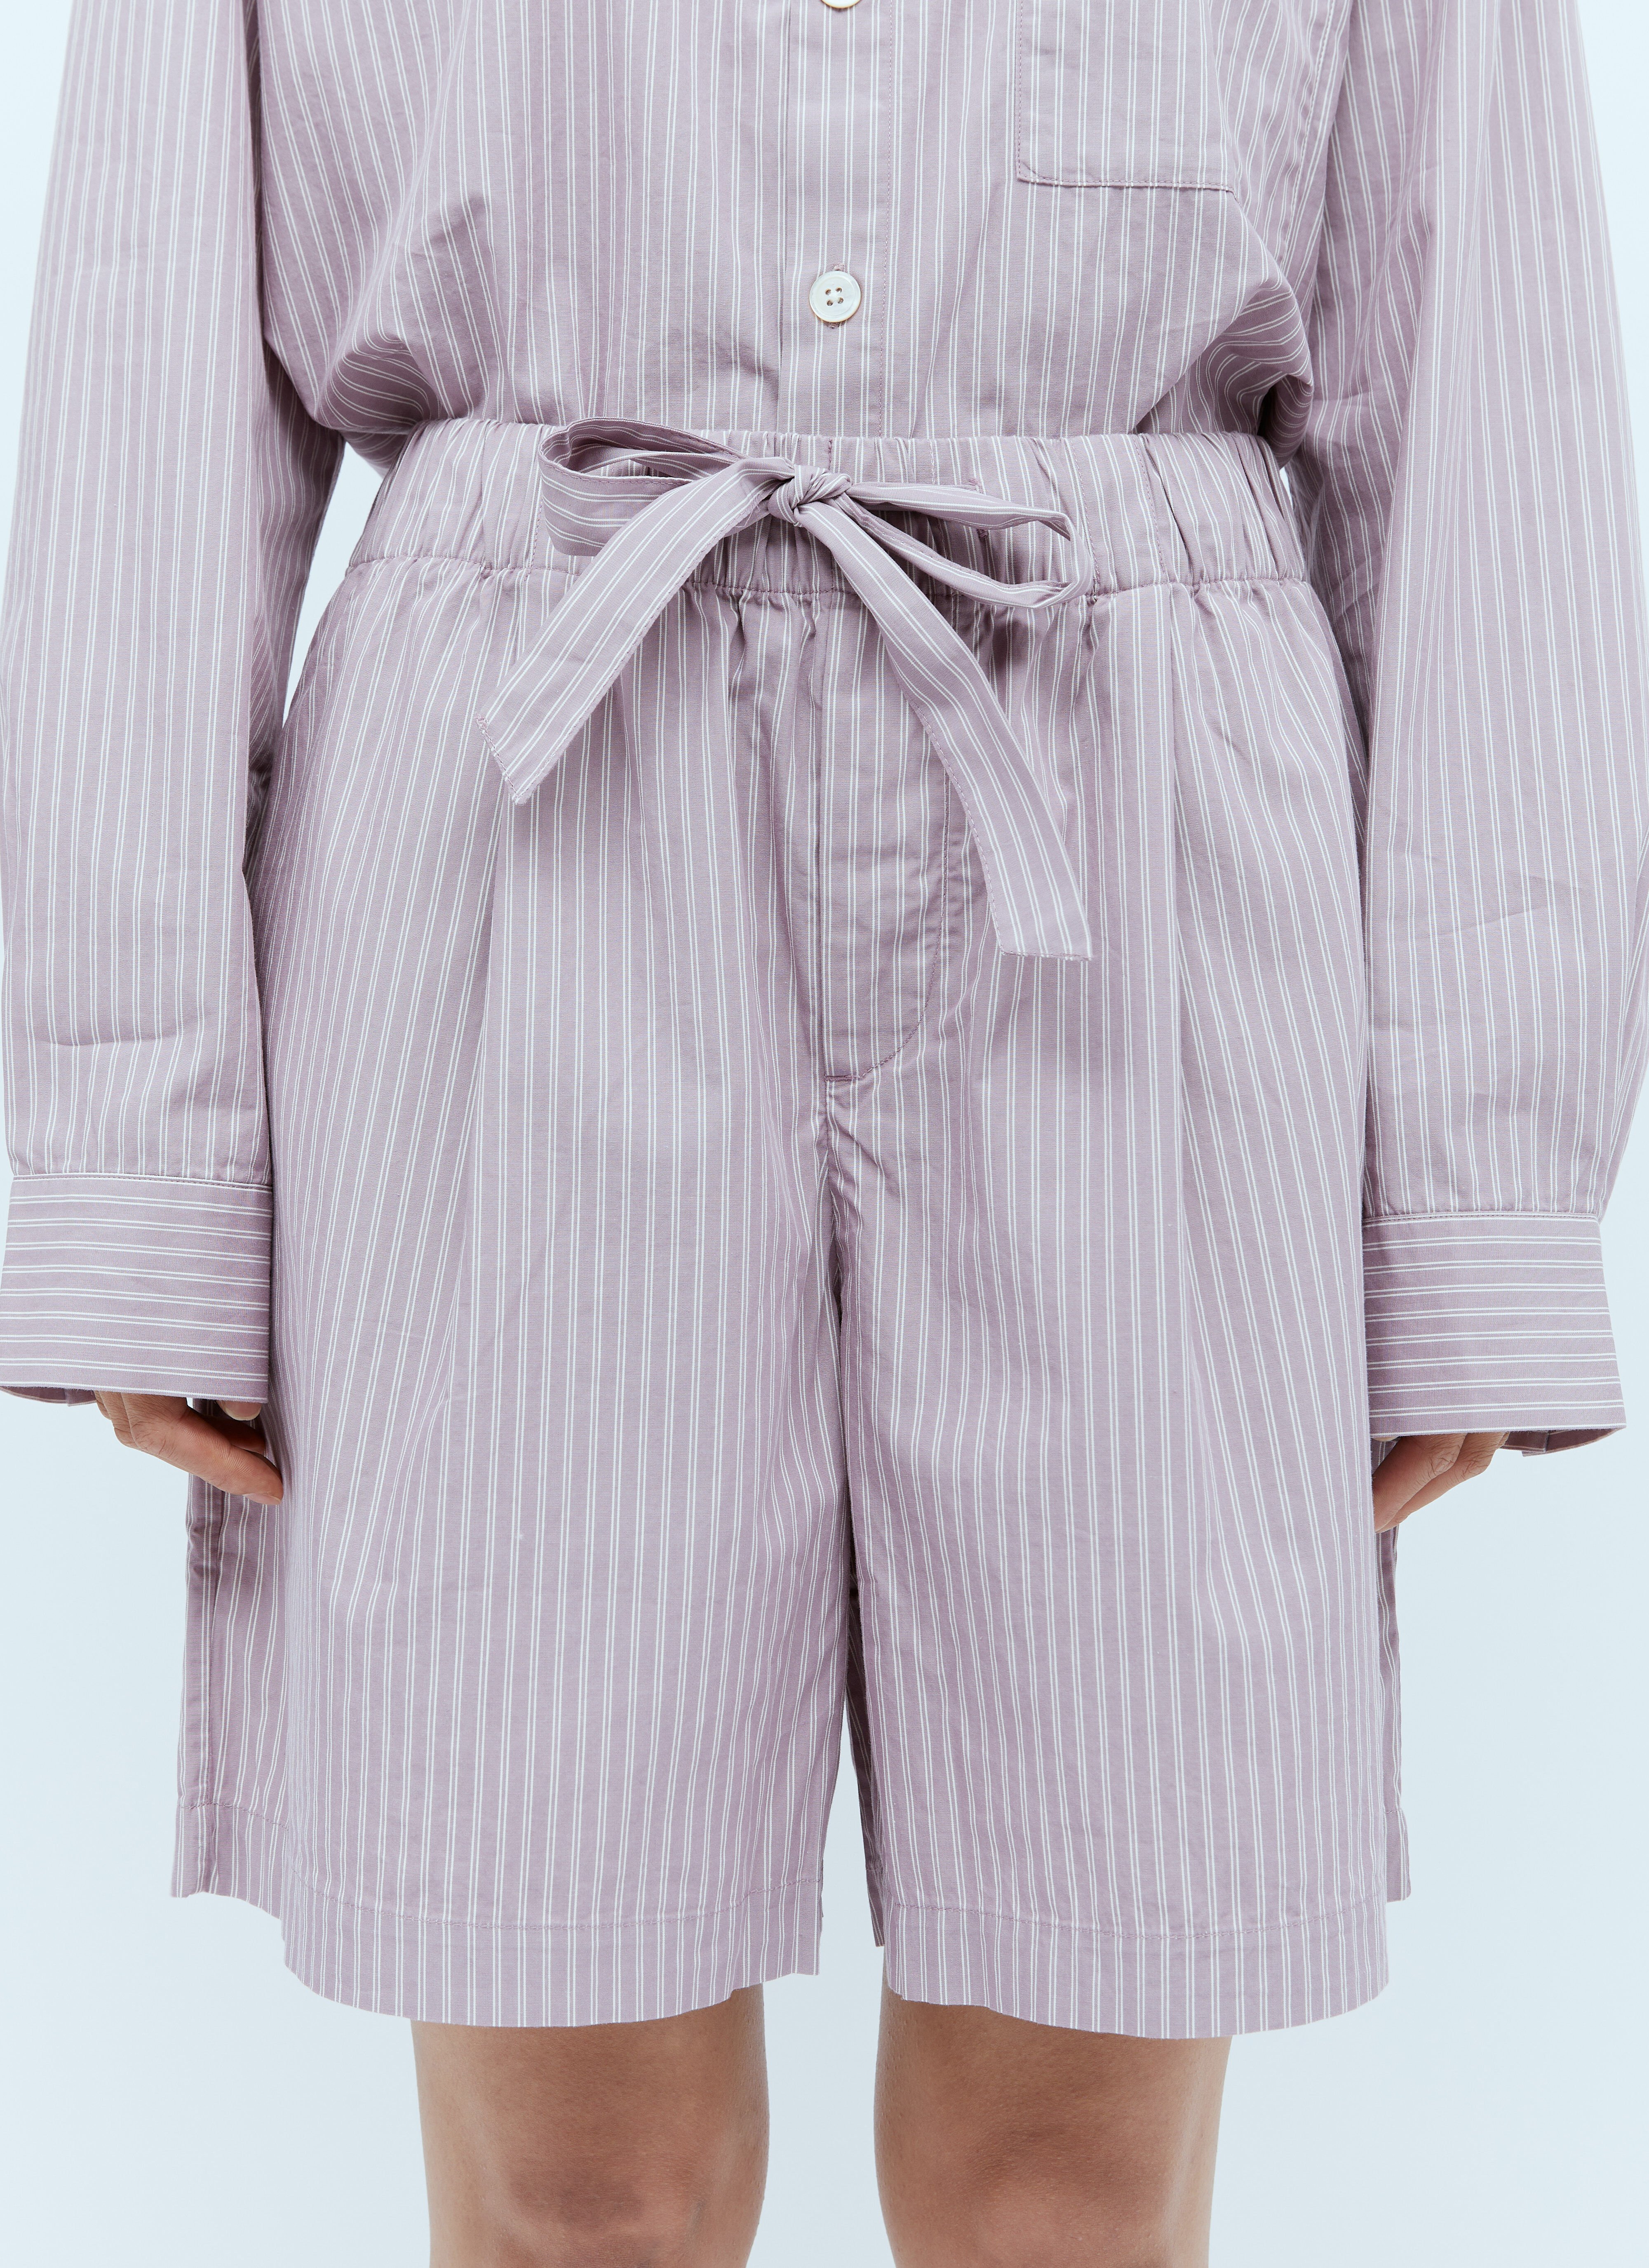 Tekla X Birkenstock 条纹短裤 乳白色 tek0355006